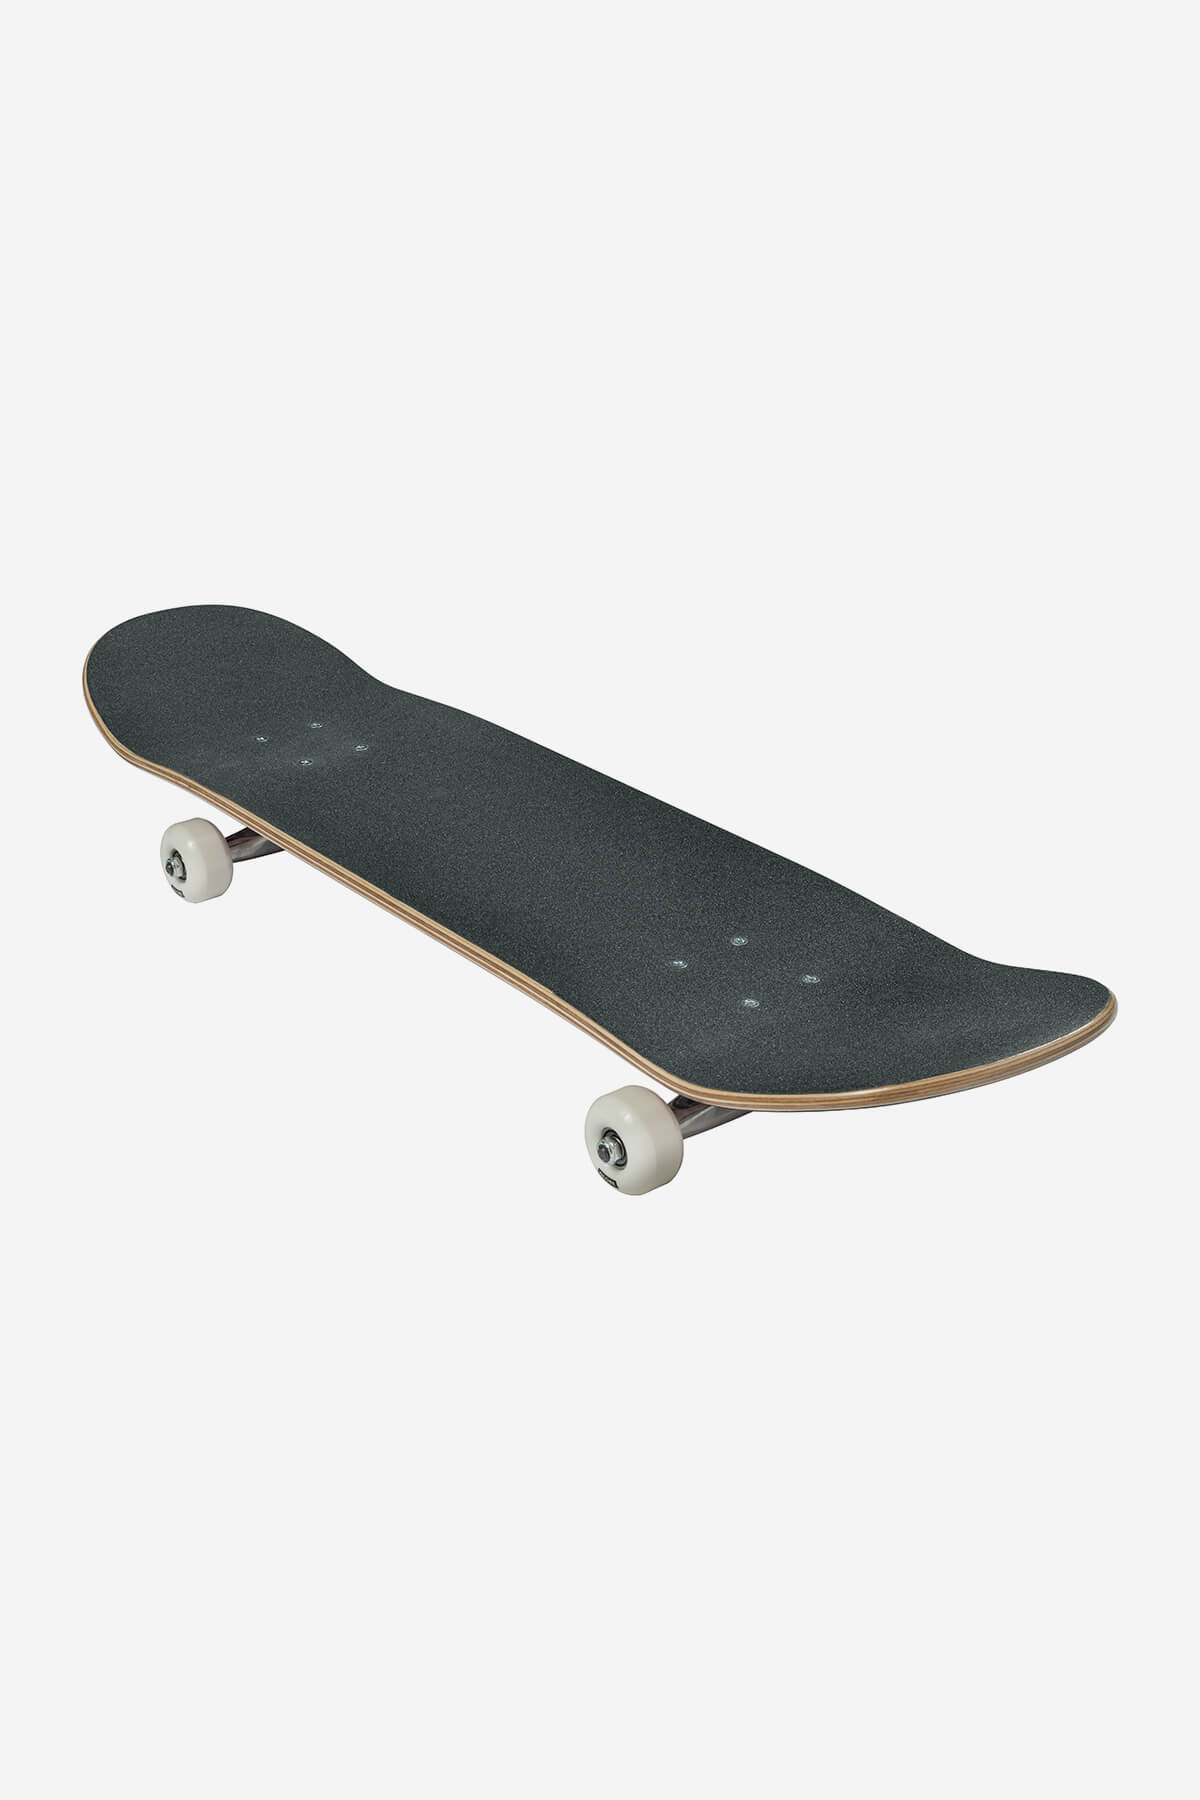 Globe - G0 Fubar - Black/Pink - 8.0" Complete Skateboard